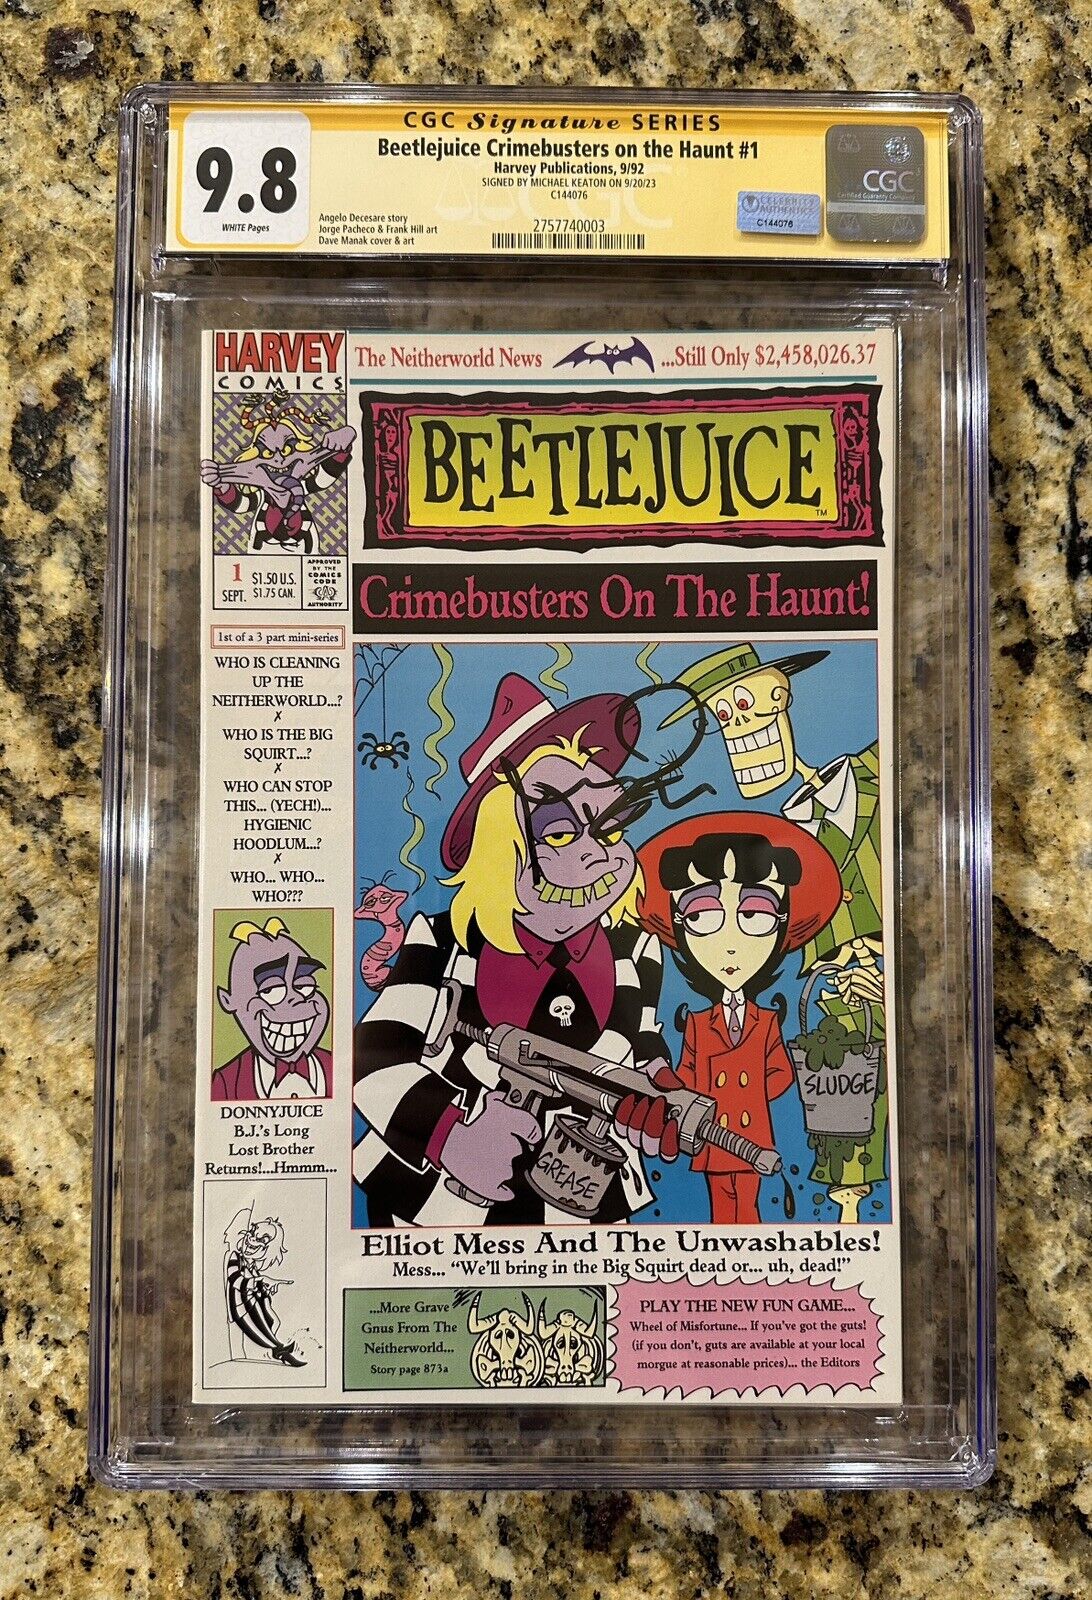 Michael Keaton Signed Autograph Comic - CGC 9.8 - Beetlejuice - Crimebusters #1